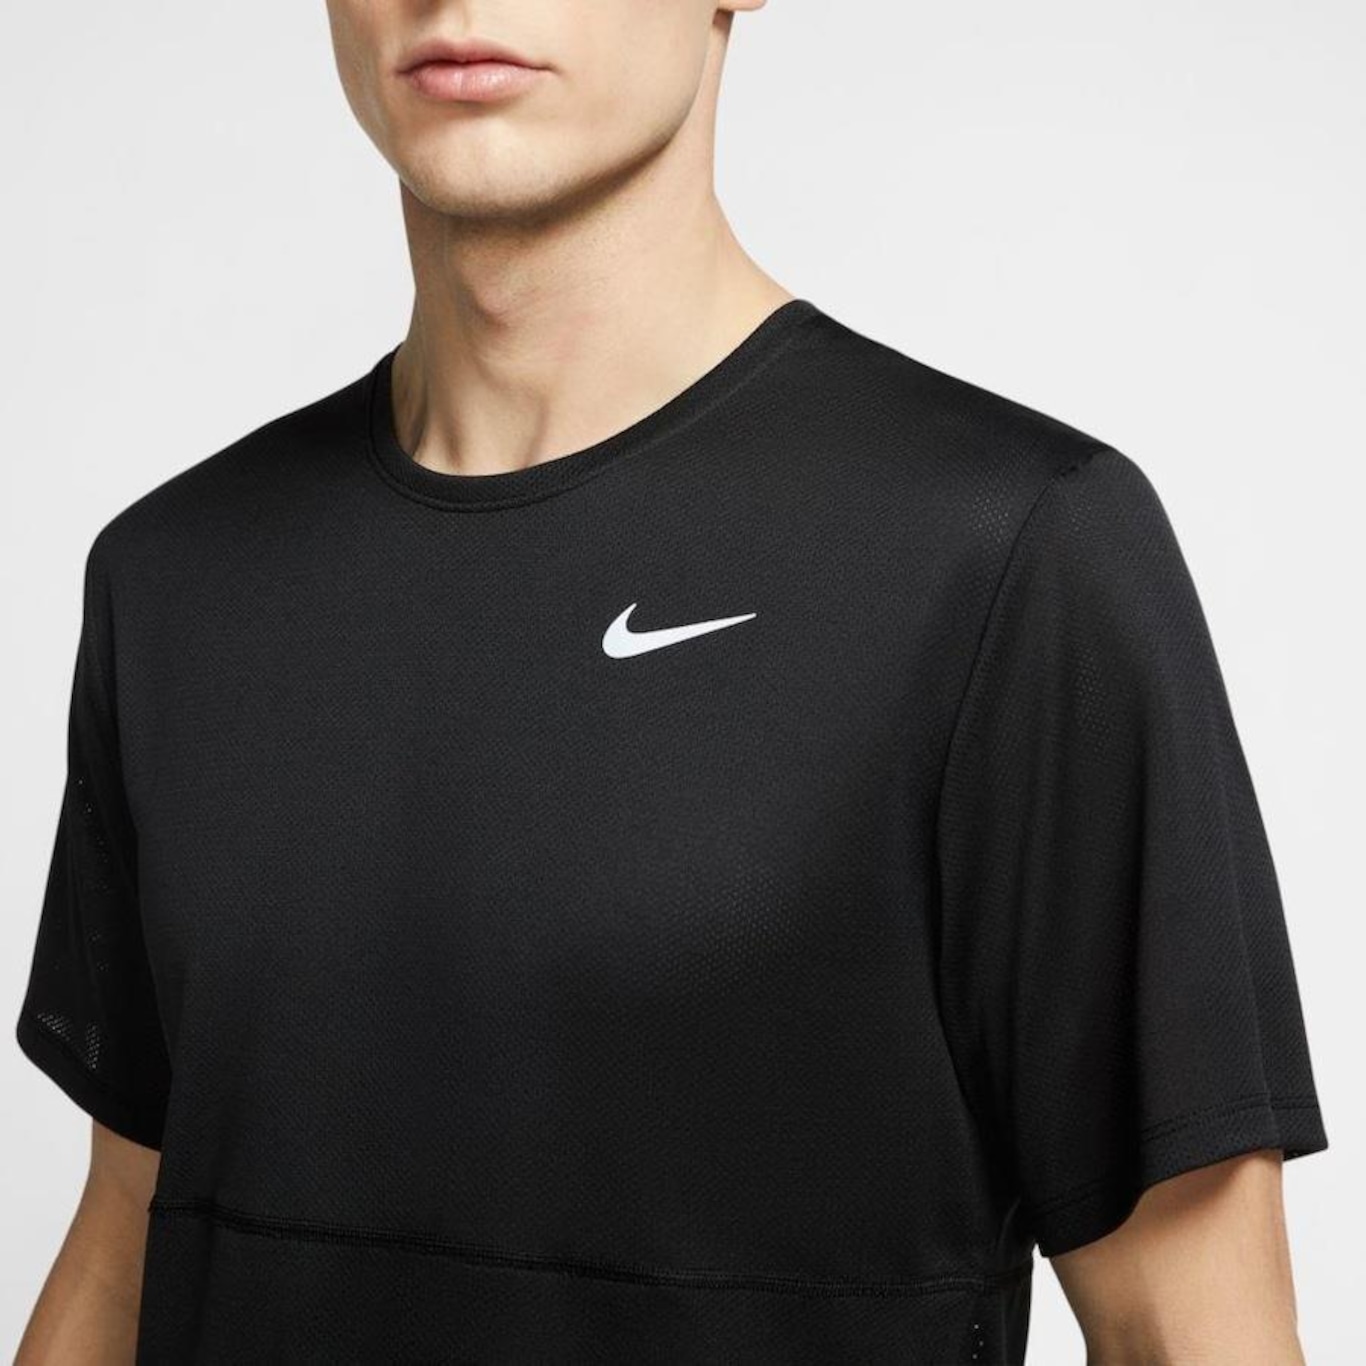 Welsprekend Thuisland Ik heb een contract gemaakt Camiseta Nike Breathe - Masculina | Centauro